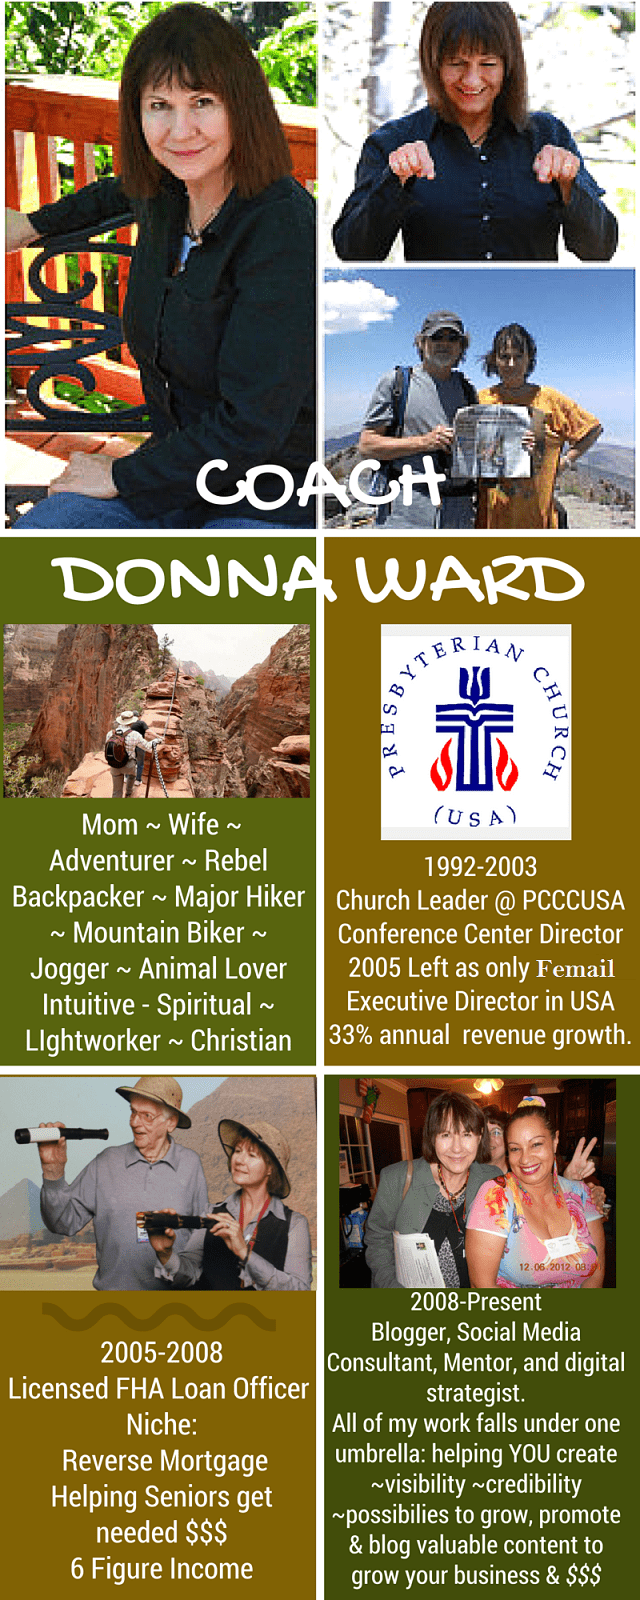 About Coach Donna Ward